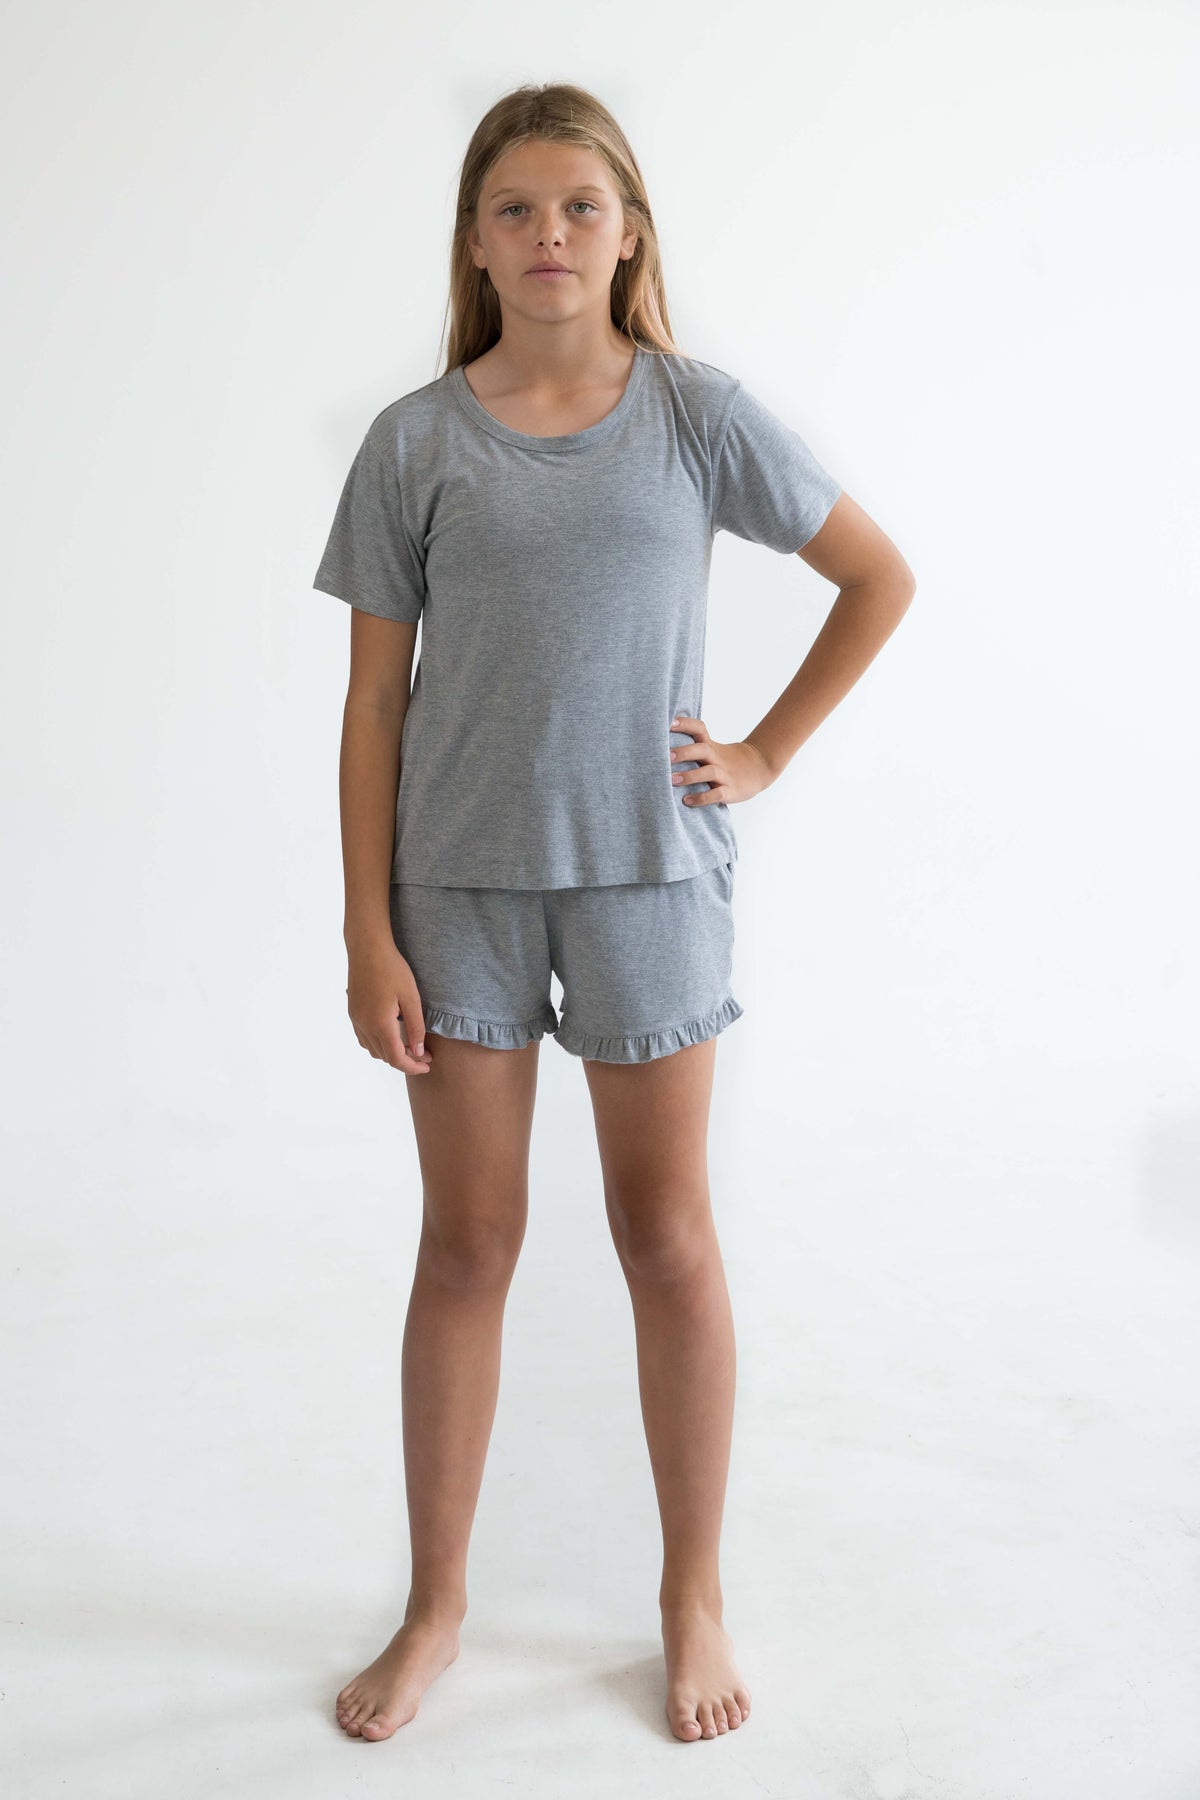 grey teen girls bamboo pyjamas shorts elastic waist, pockets and drawstring by Love Haidee Australia front view Chloe